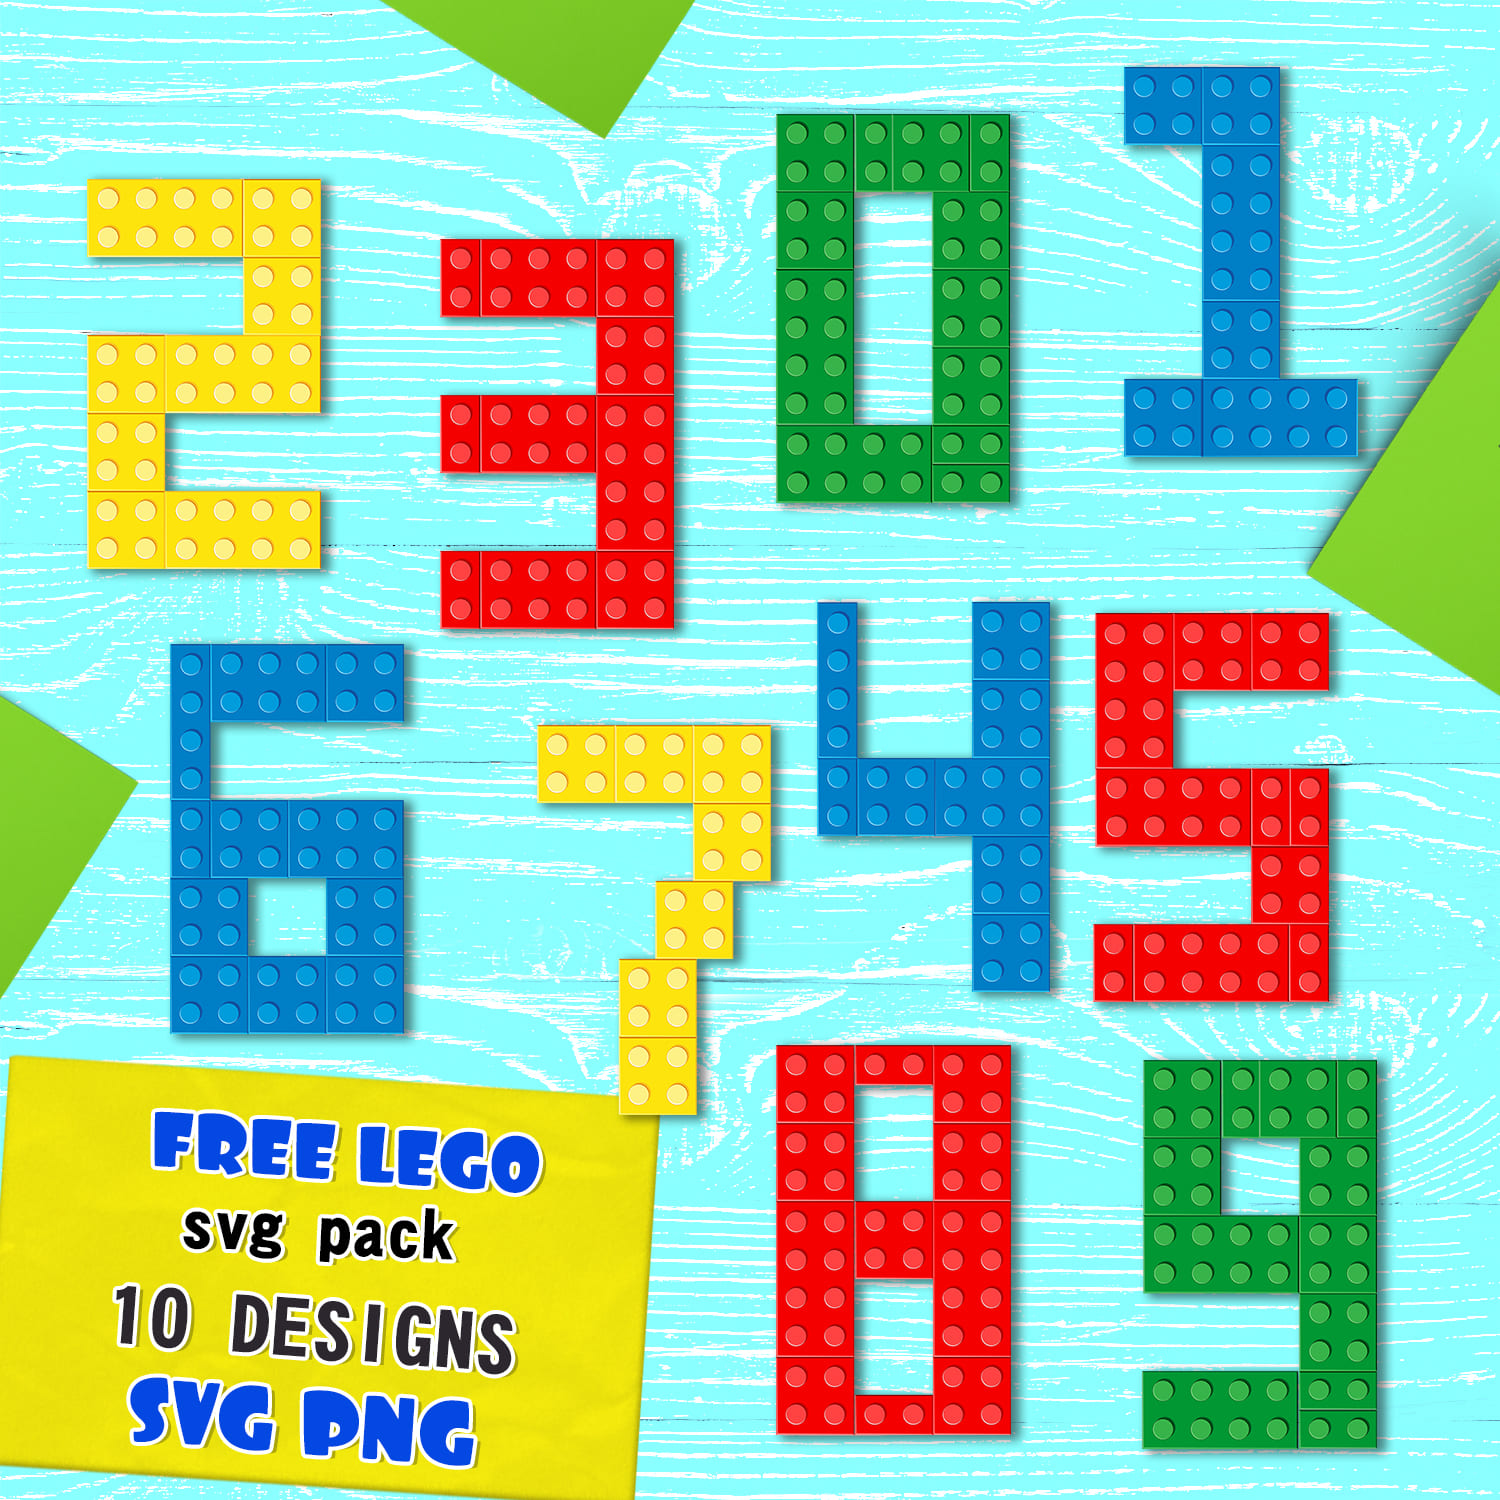 Free Lego SVG T-shirt Designs Bundle - main image preview.